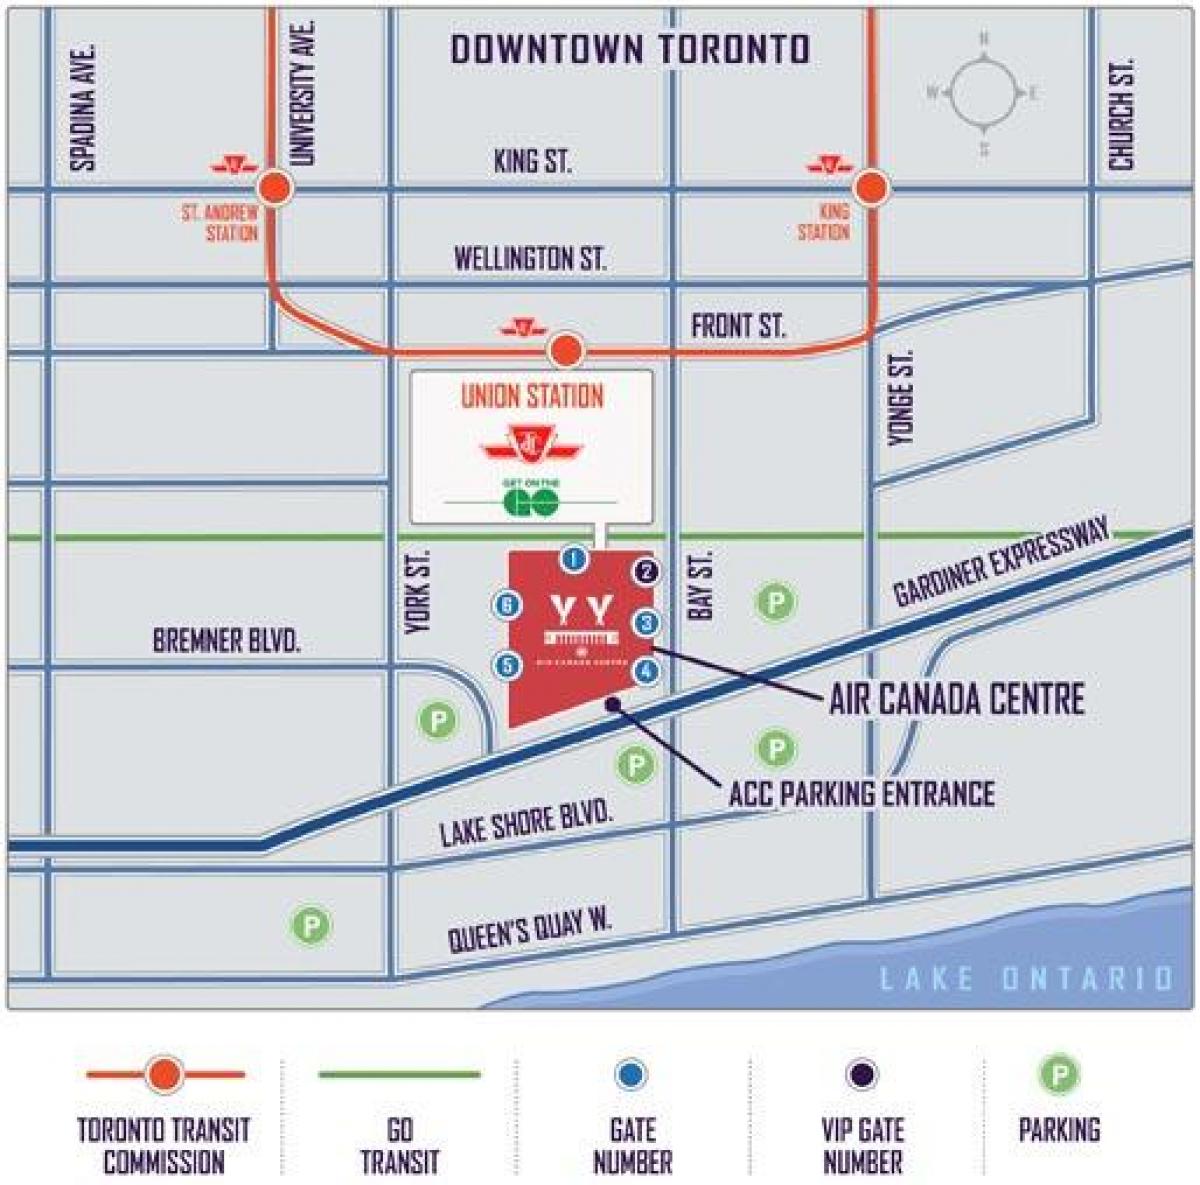 Peta Udara Kanada parking Centre - ACC